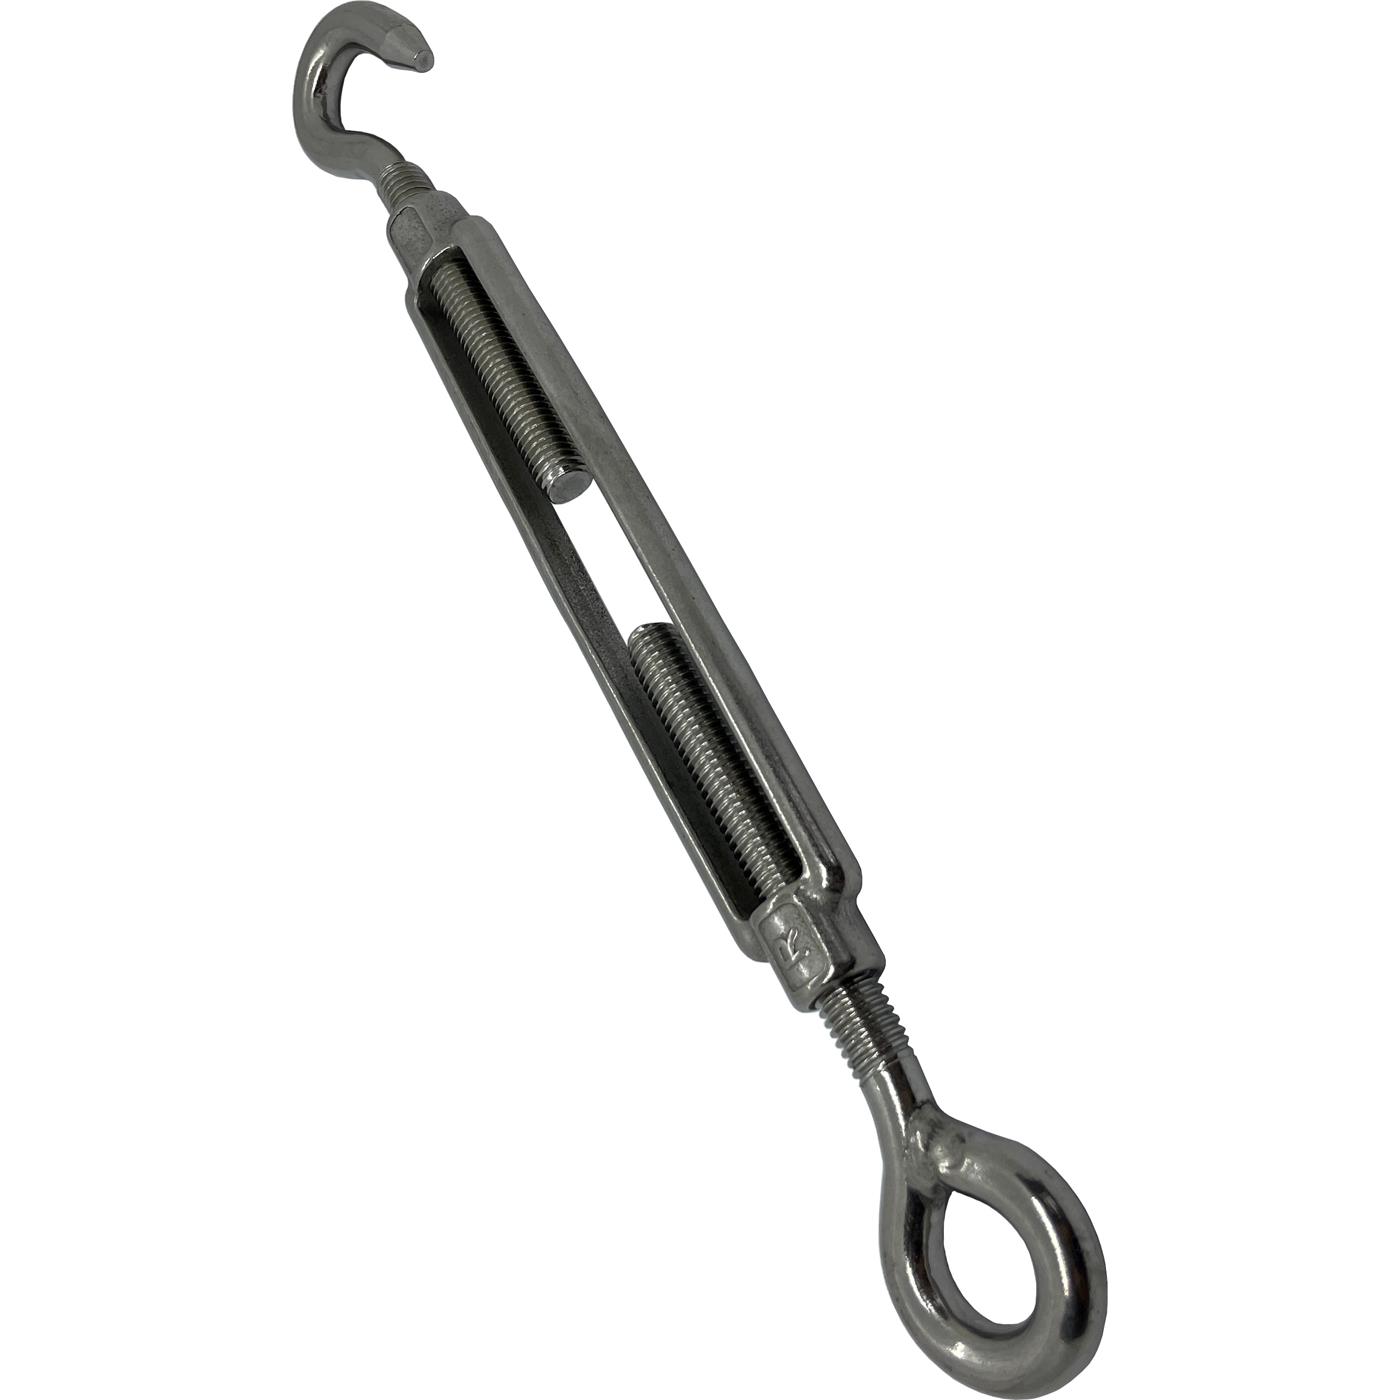 Rope tensioner Eyelet-Hook Stainless steel V2A 304 M10 Turnbuckle Shroud clamp